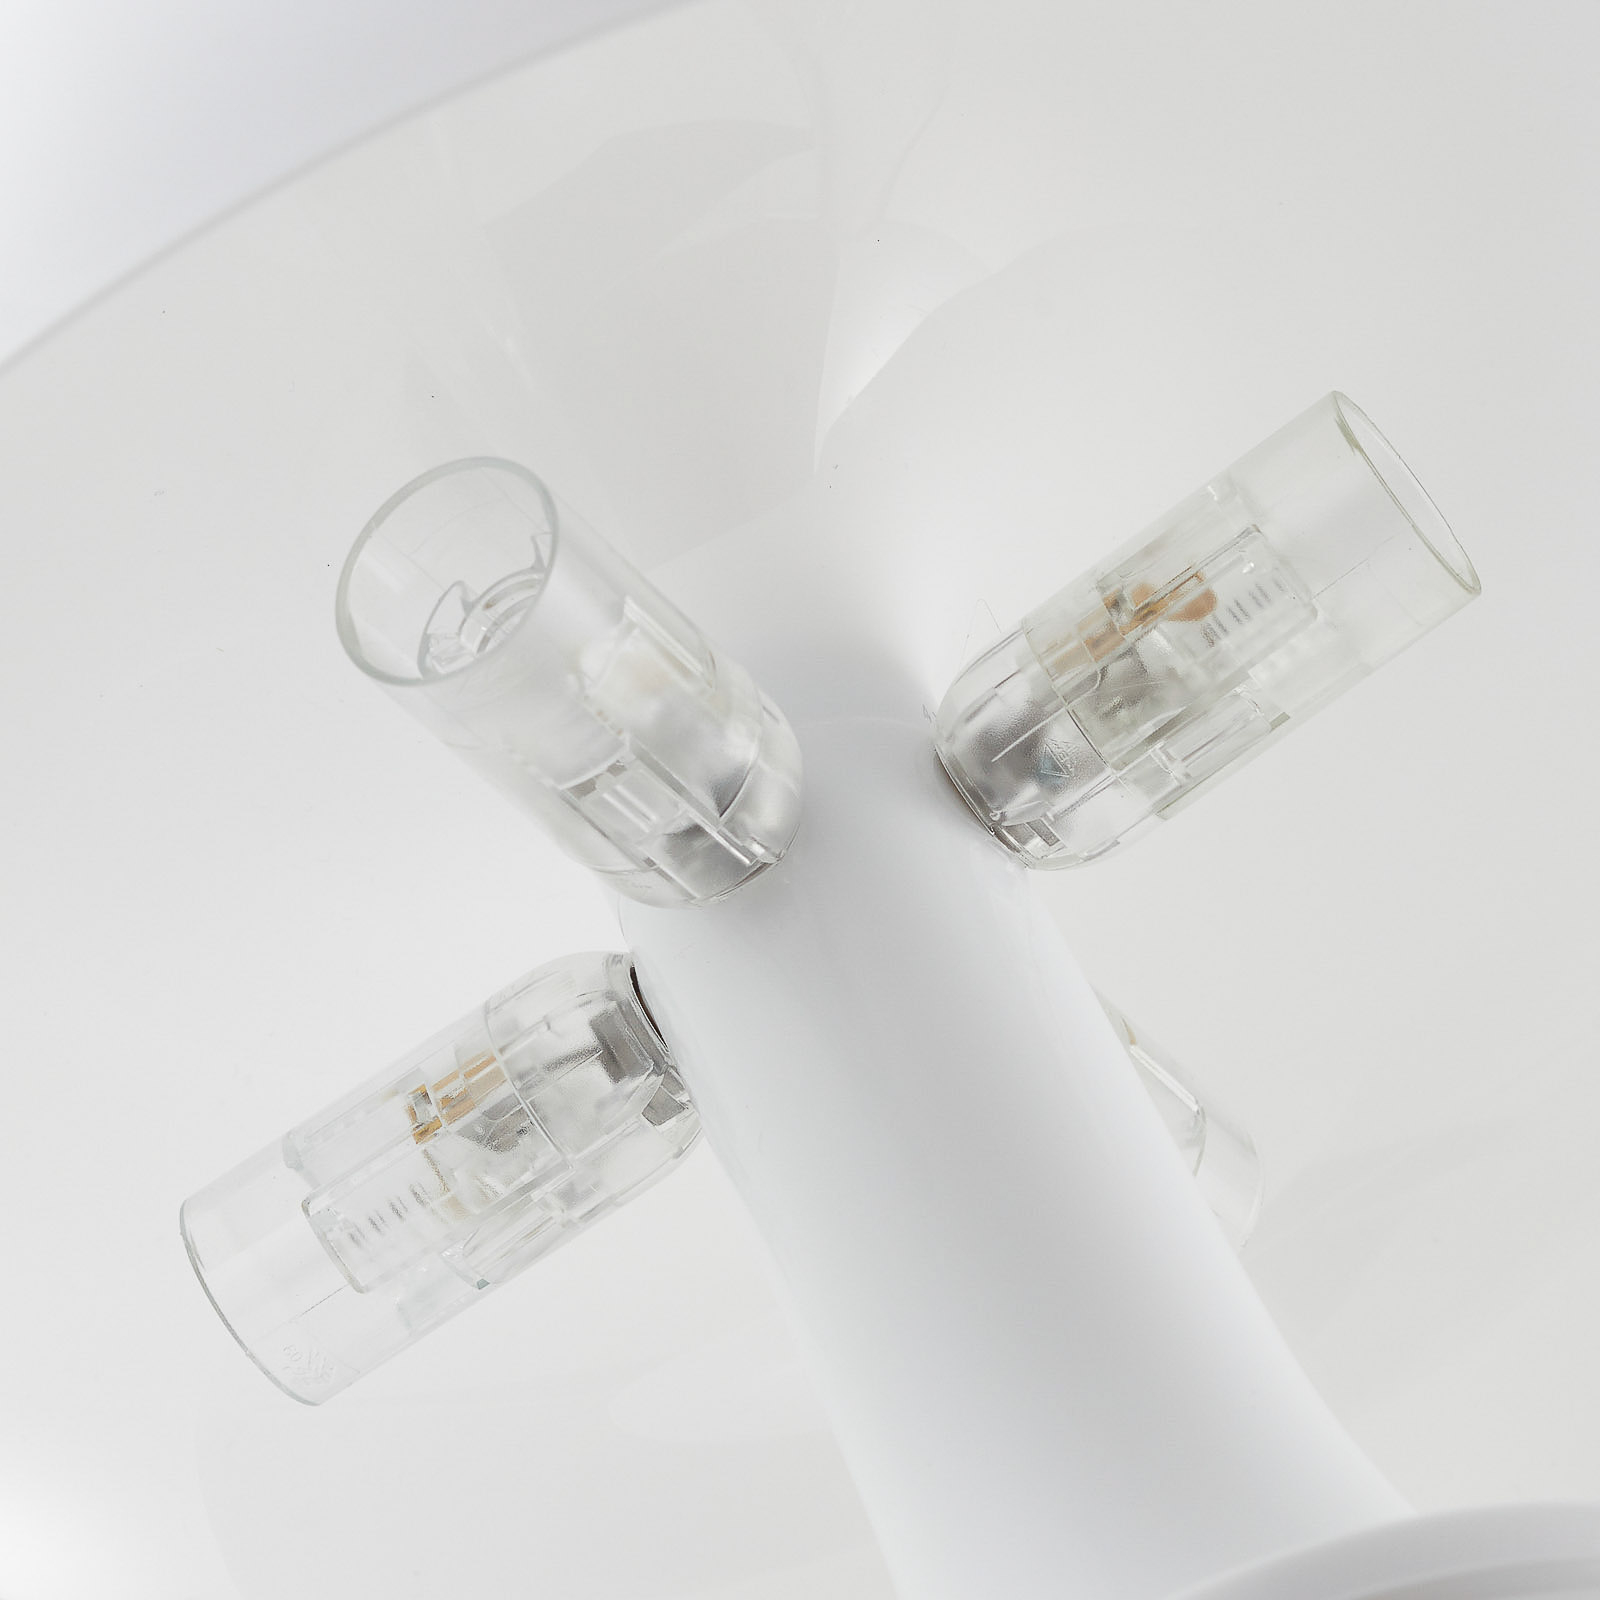 Artemide Nessino - designer lámpa, fehér